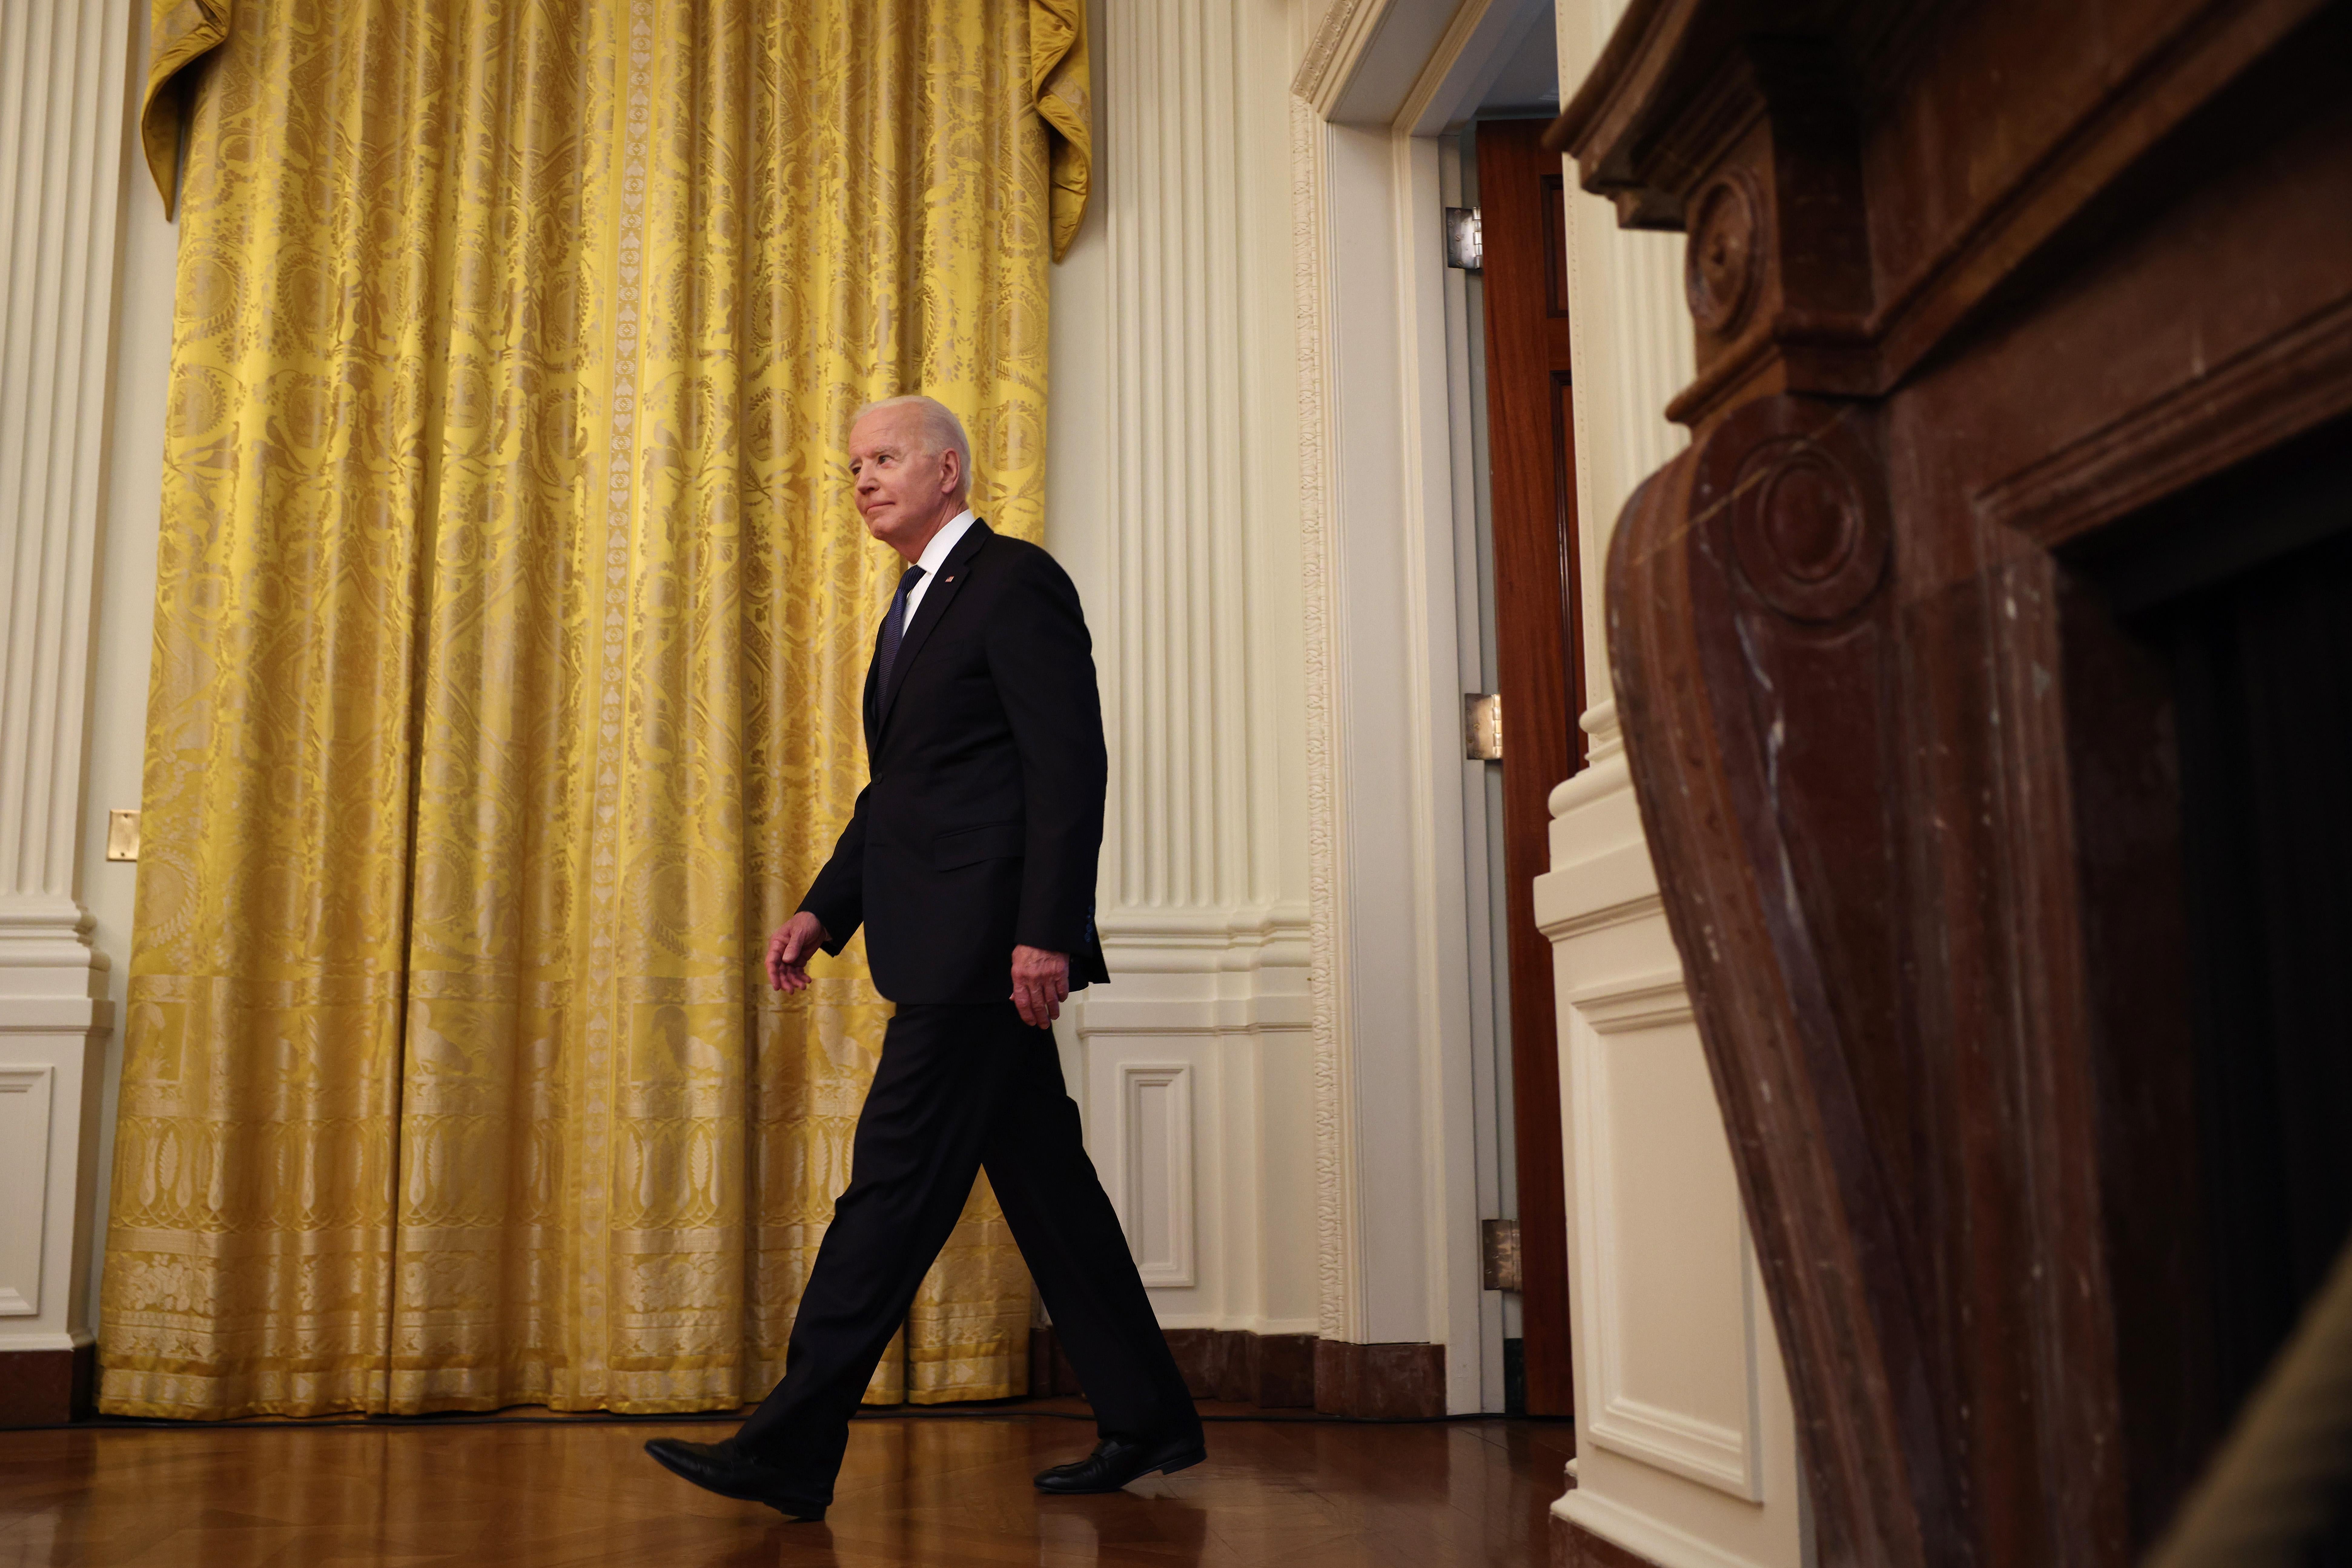 Joe Biden walks into a room in front of a golden curtain.